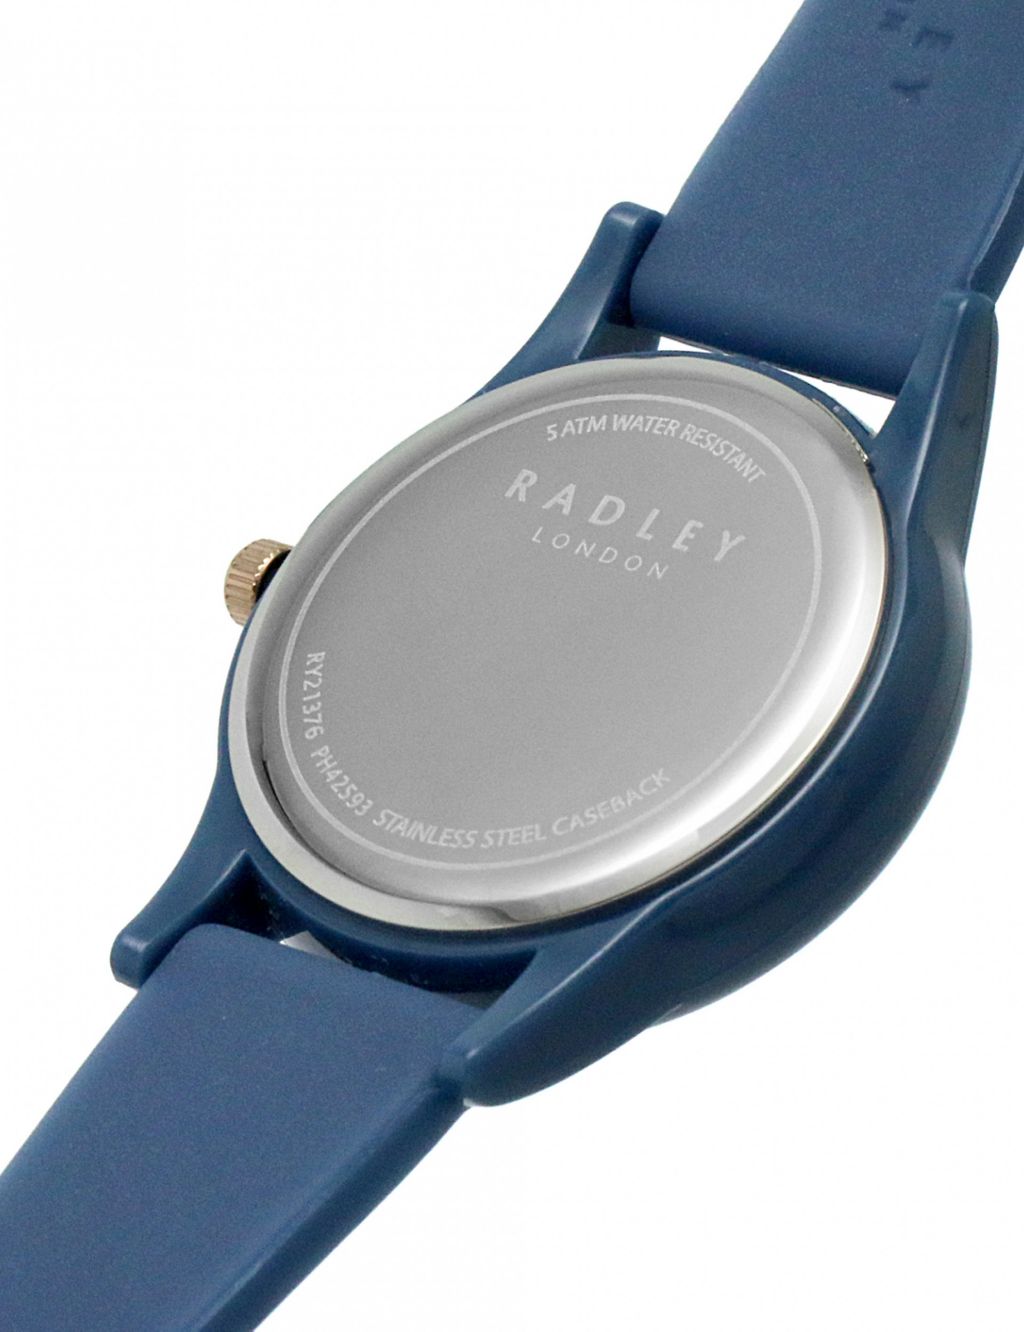 Radley Scottie Dog Blue Leather Watch 5 of 8